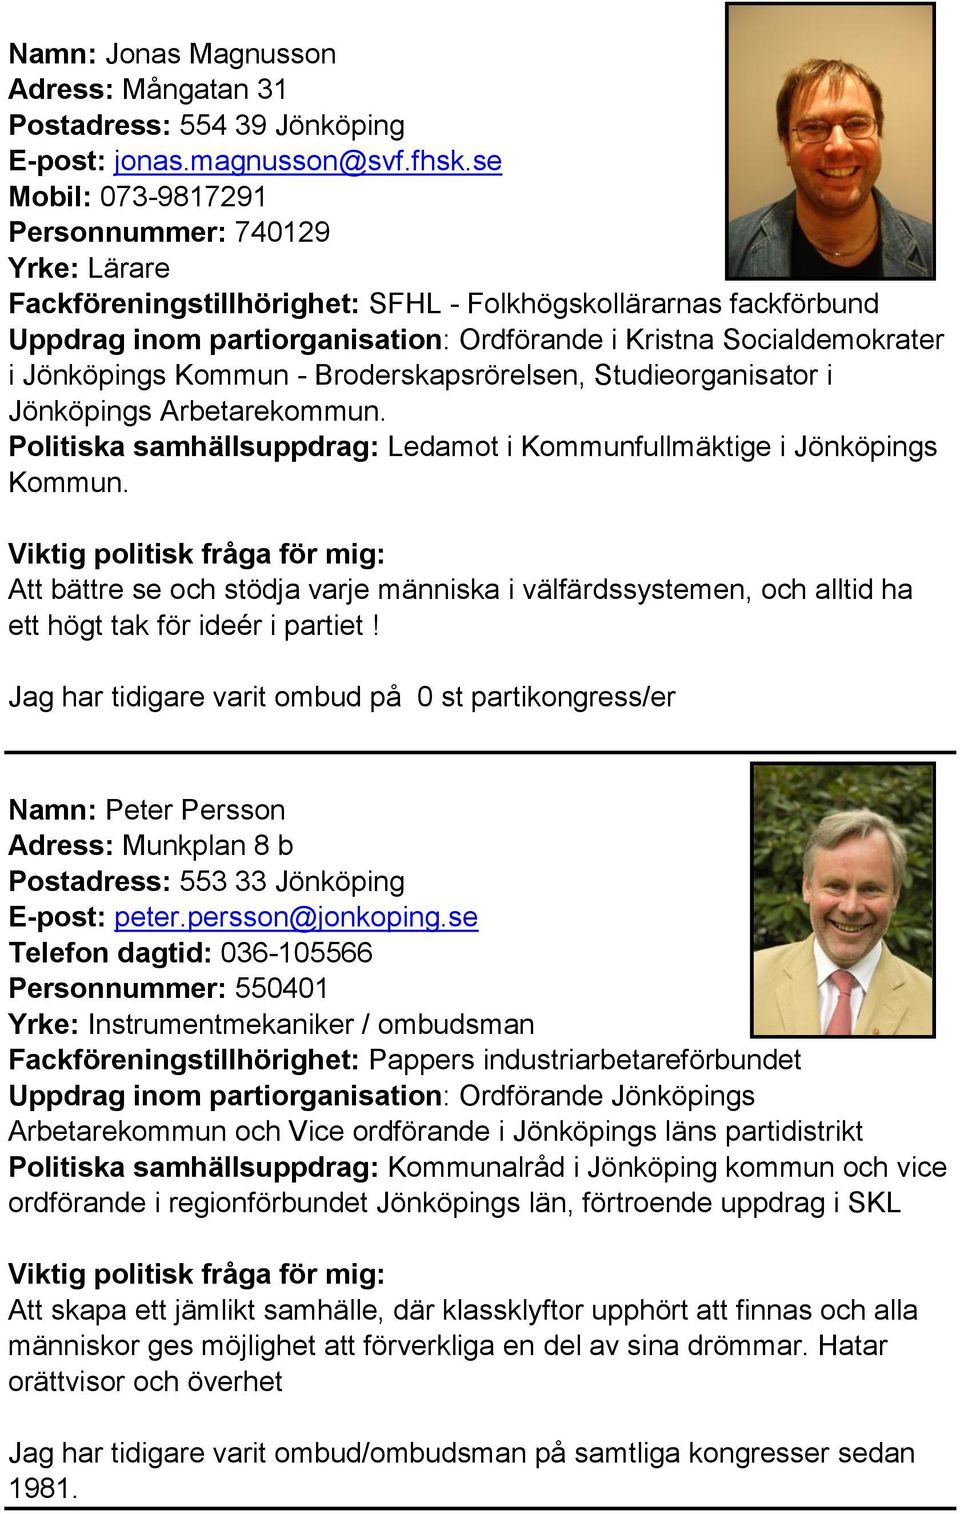 Jönköpings Kommun - Broderskapsrörelsen, Studieorganisator i Jönköpings Arbetarekommun. Politiska samhällsuppdrag: Ledamot i Kommunfullmäktige i Jönköpings Kommun.